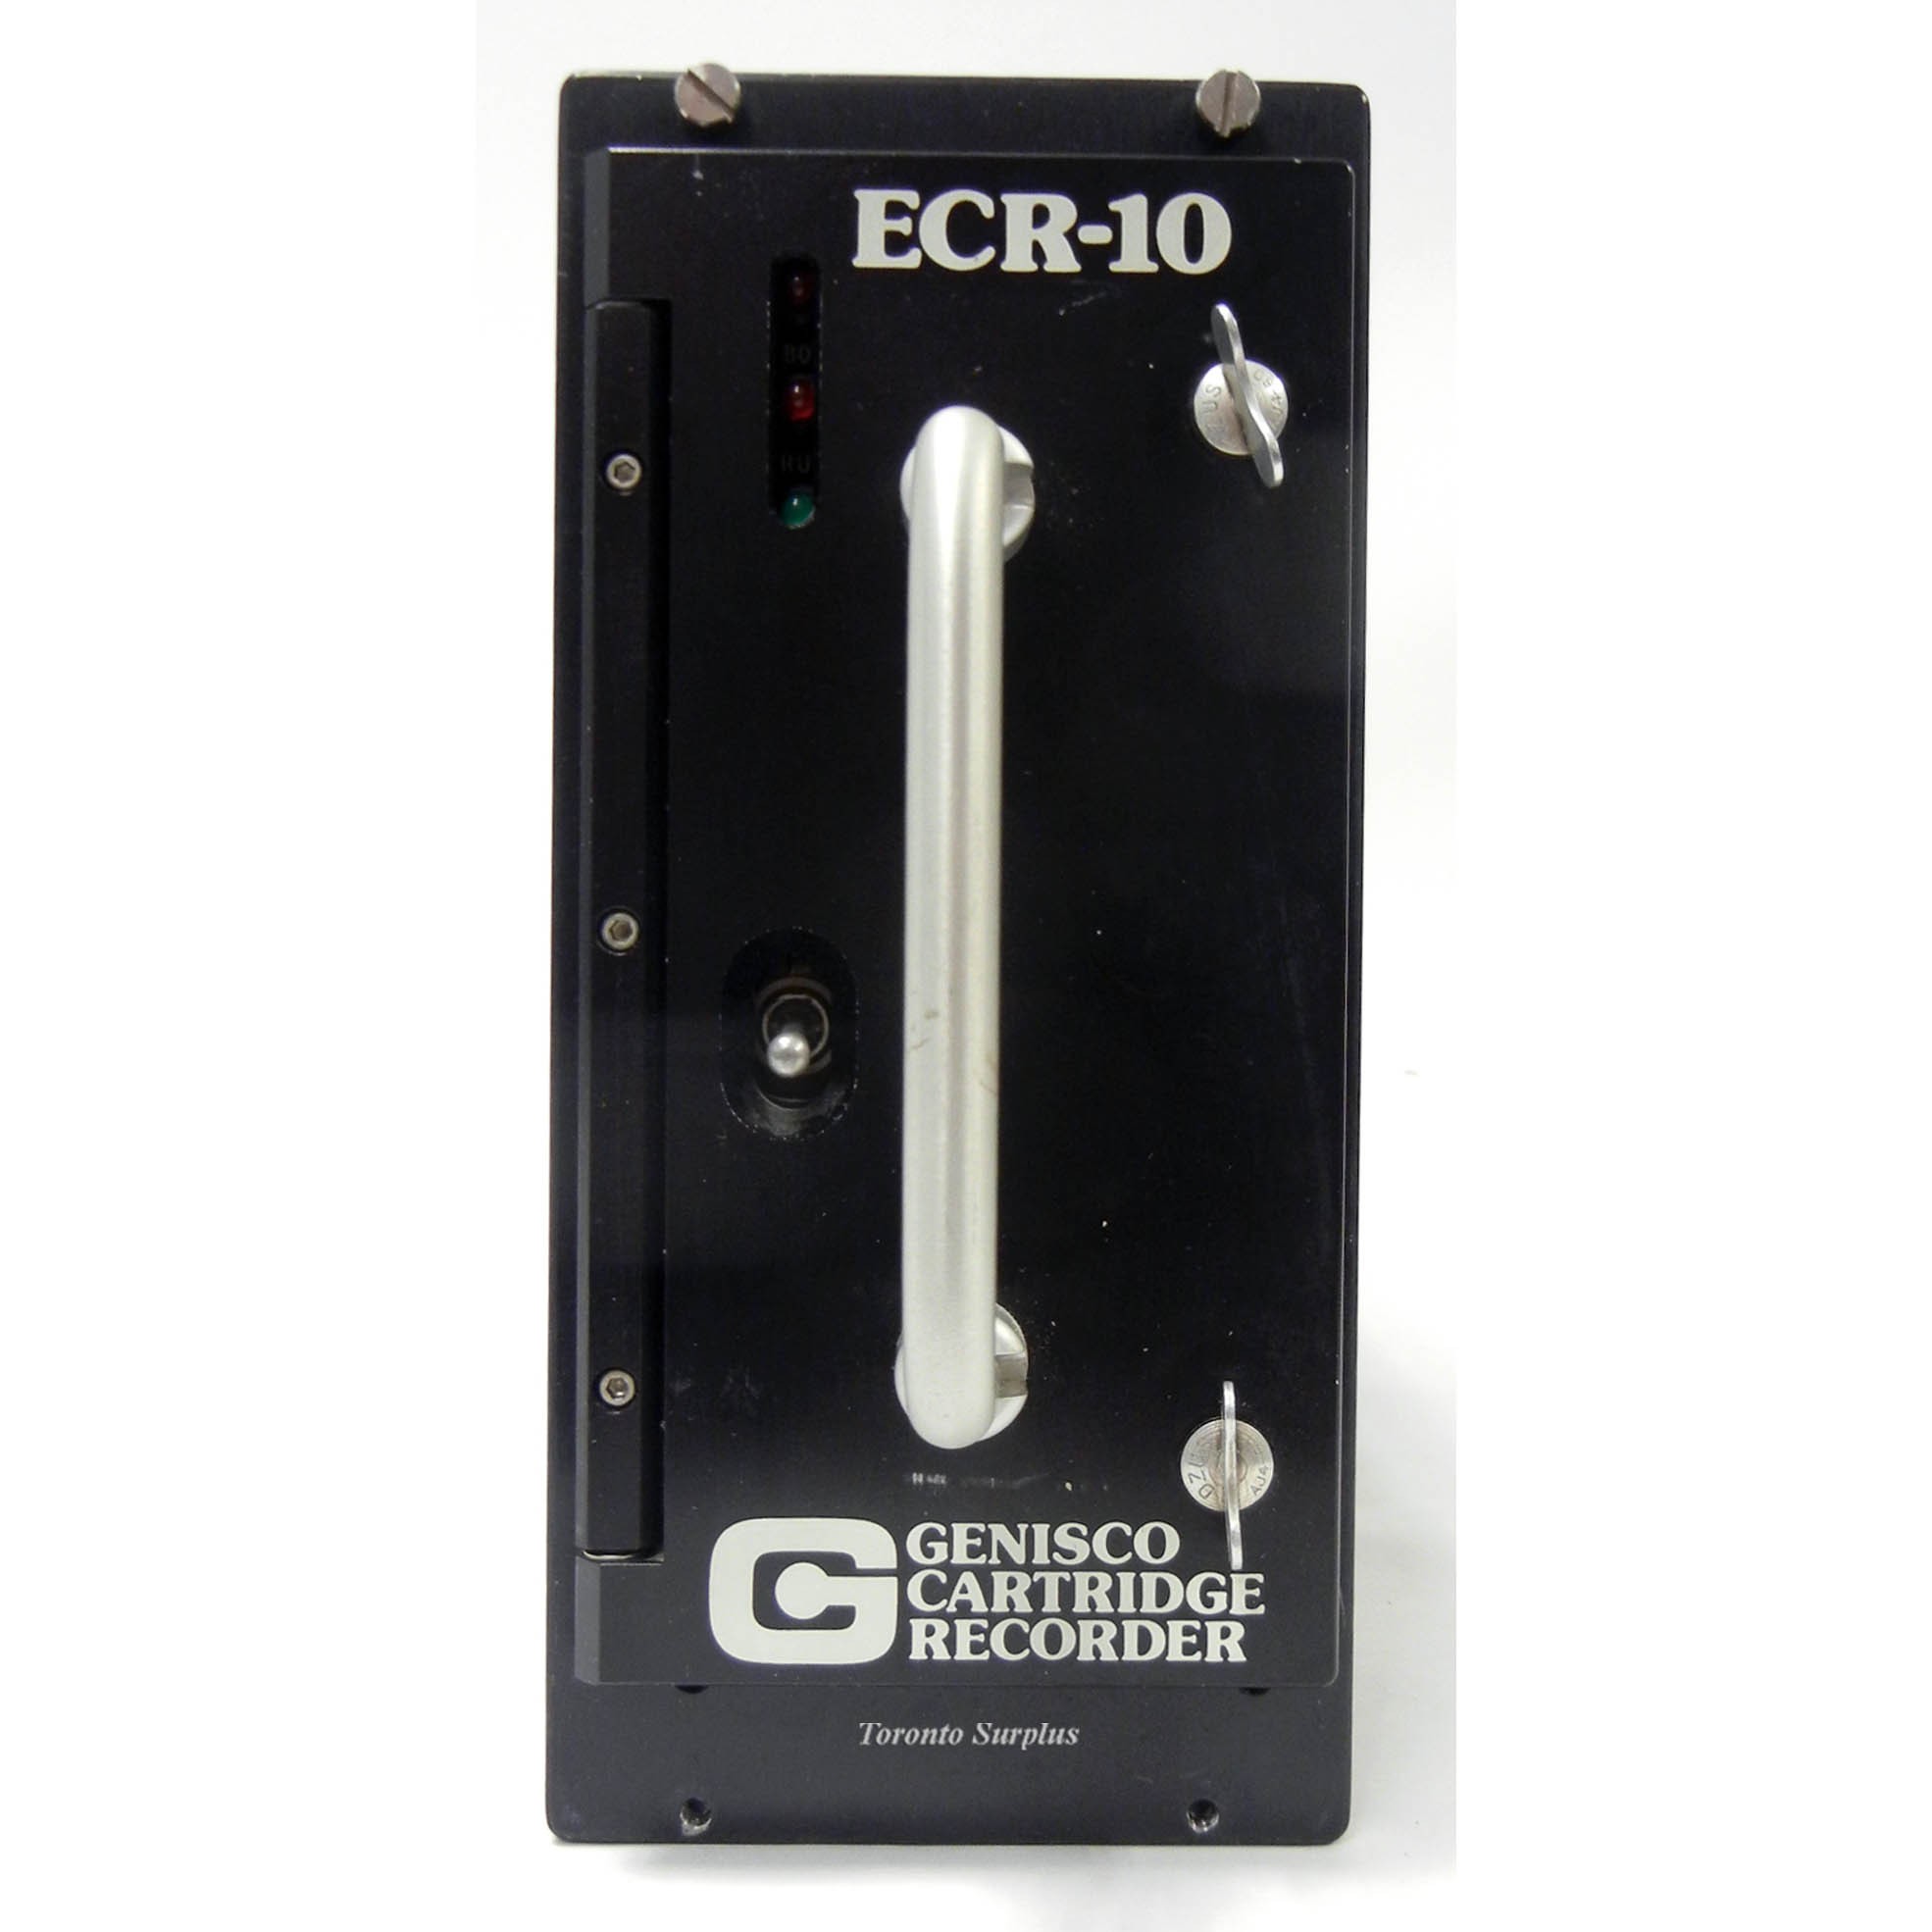 Genisco ECR-10 Cartridge Recorder